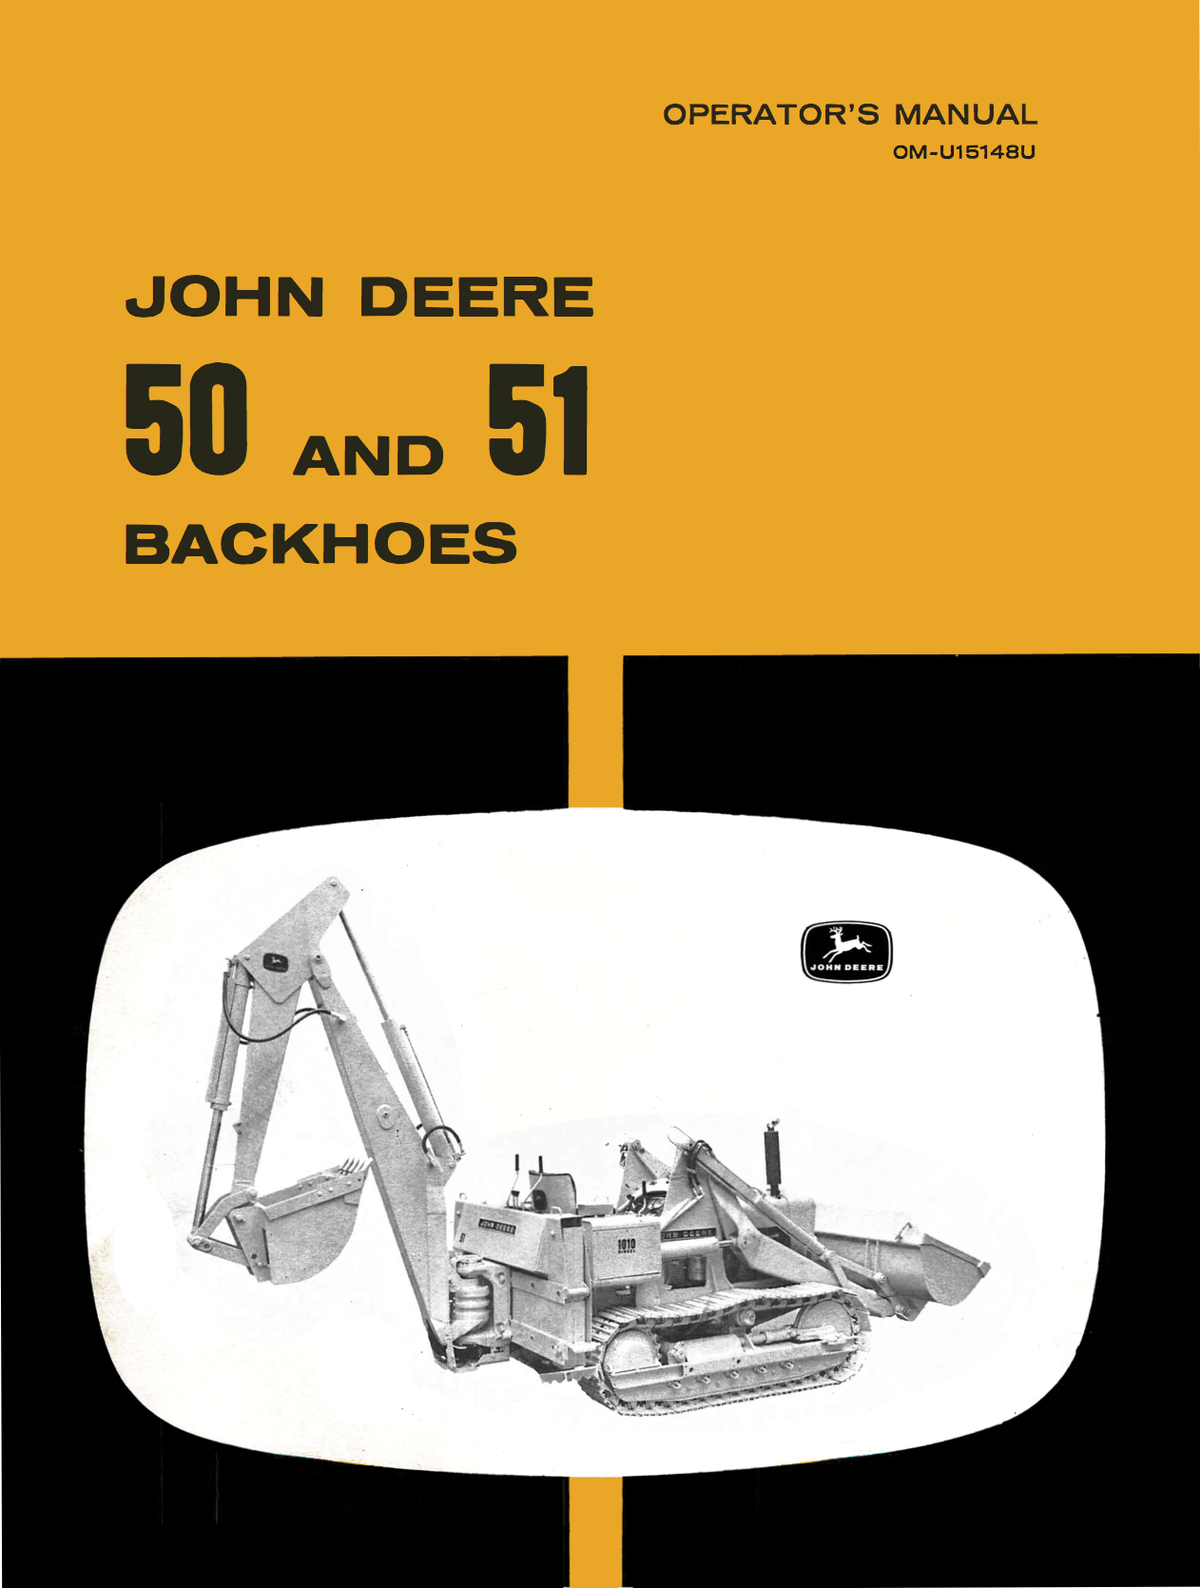 John Deere 50 and 51 Backhoes - Operator's Manual - Ag Manuals - A Provider of Digital Farm Manuals - 1